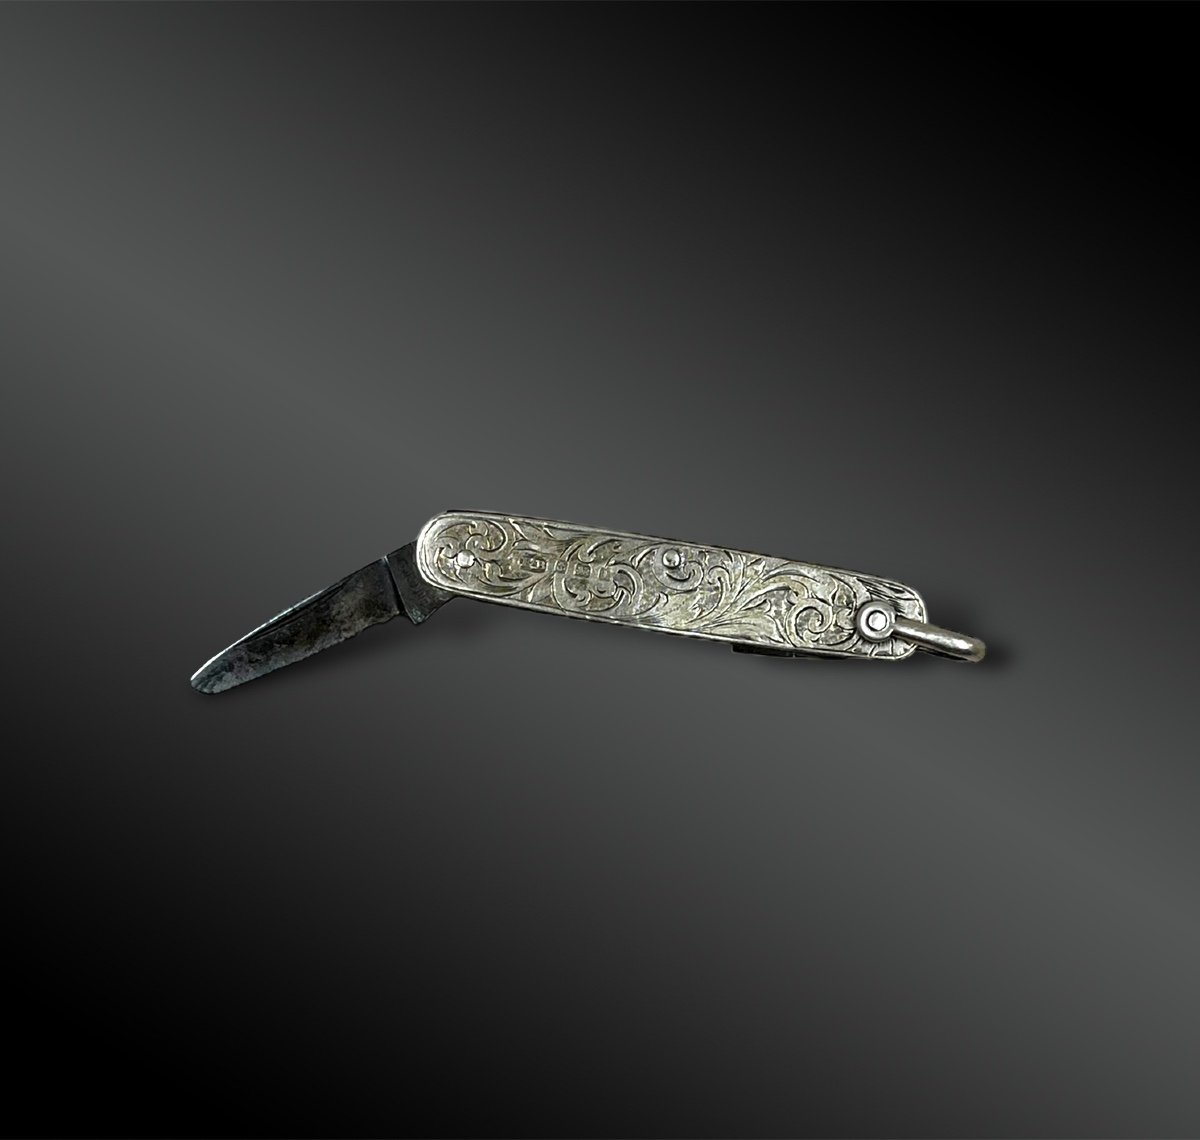 Two-piece Pocket Knife Or Nail Knife - England - Circa 1900